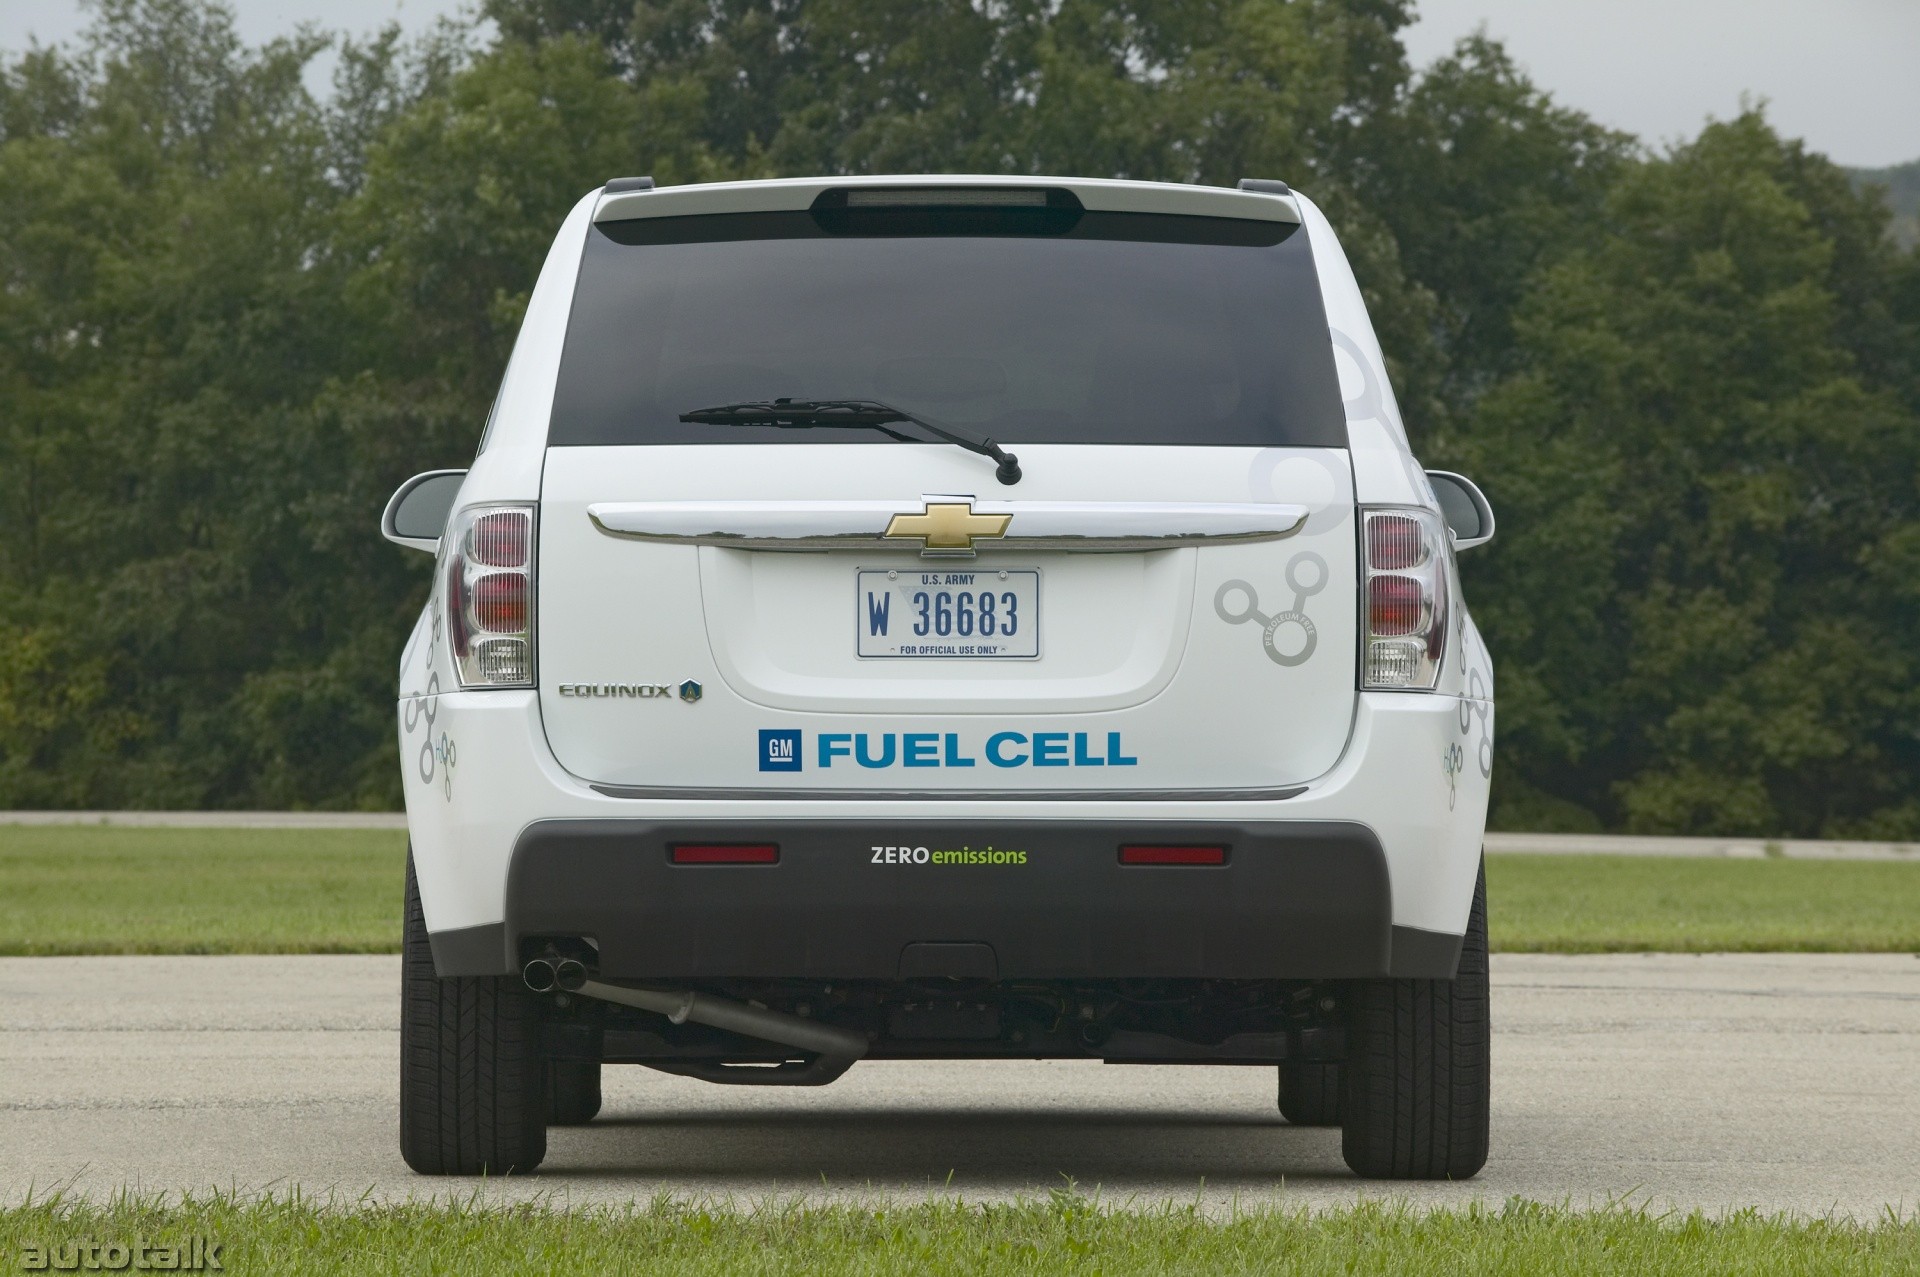 Chevrolet Equinox Fuel Cell U.S. Army Prototype